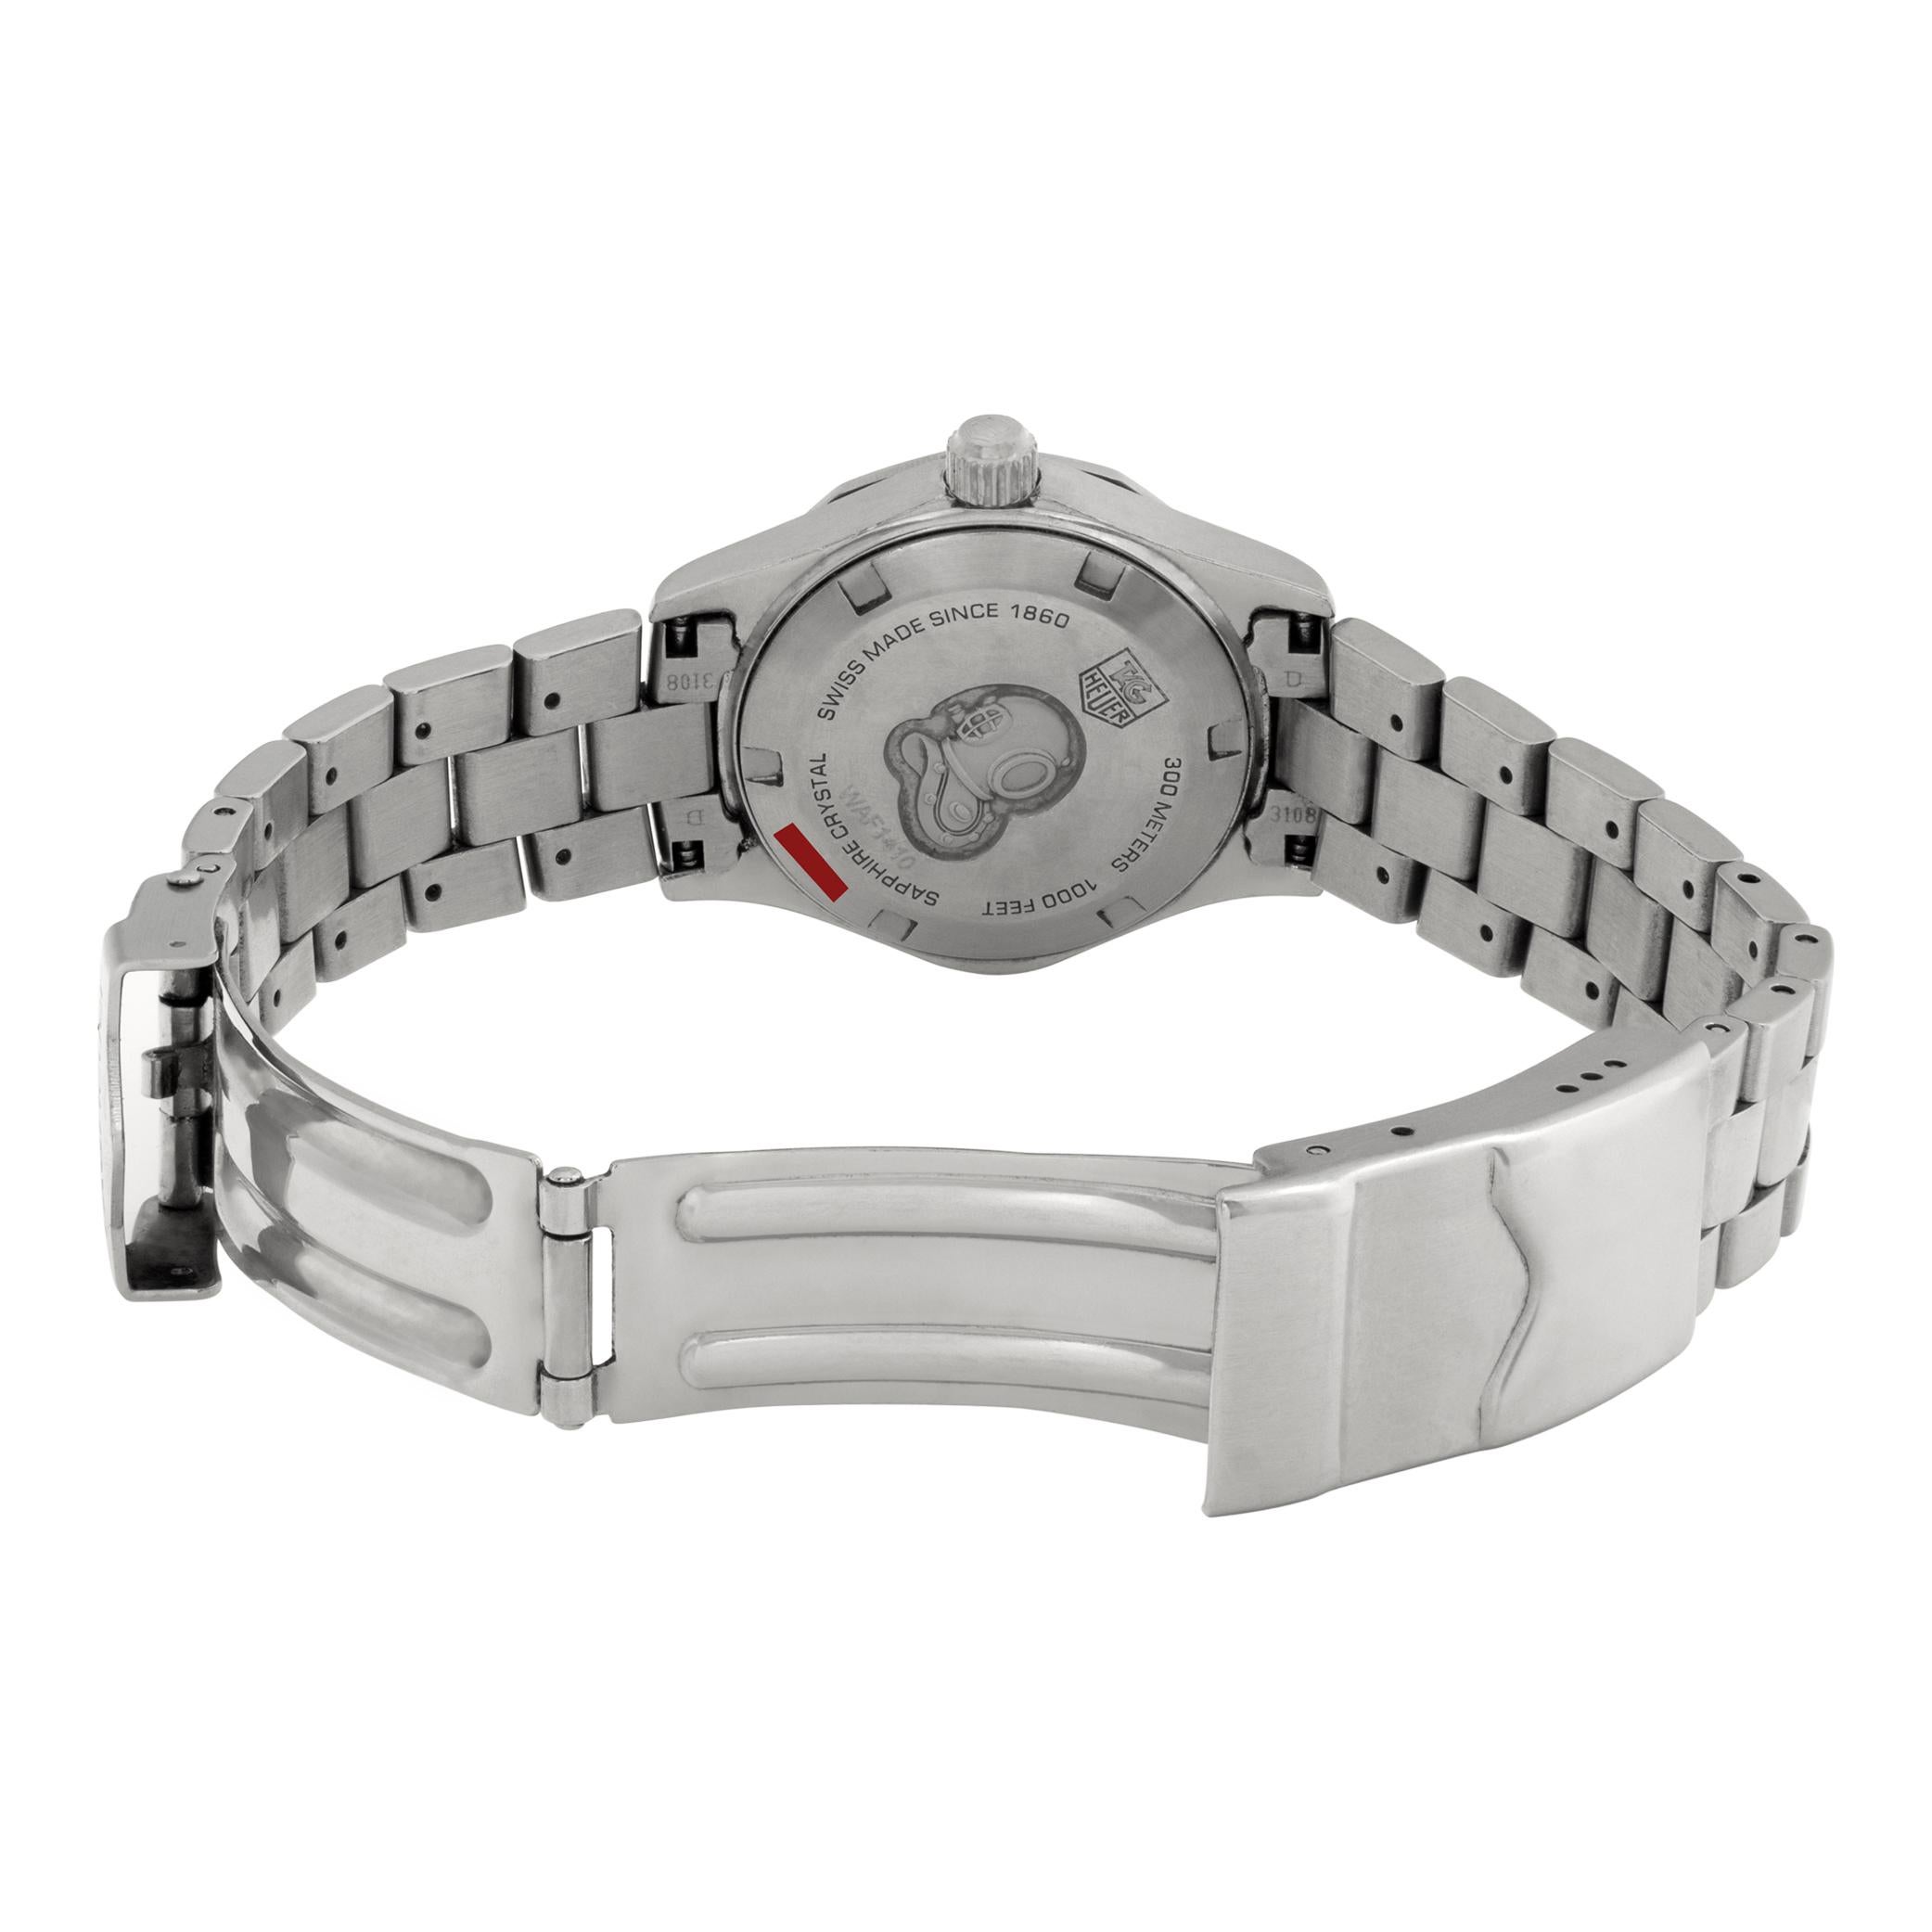 Women's Tag Heuer Aquaracer stainless steel Quartz Wristwatch Ref waf1410 For Sale